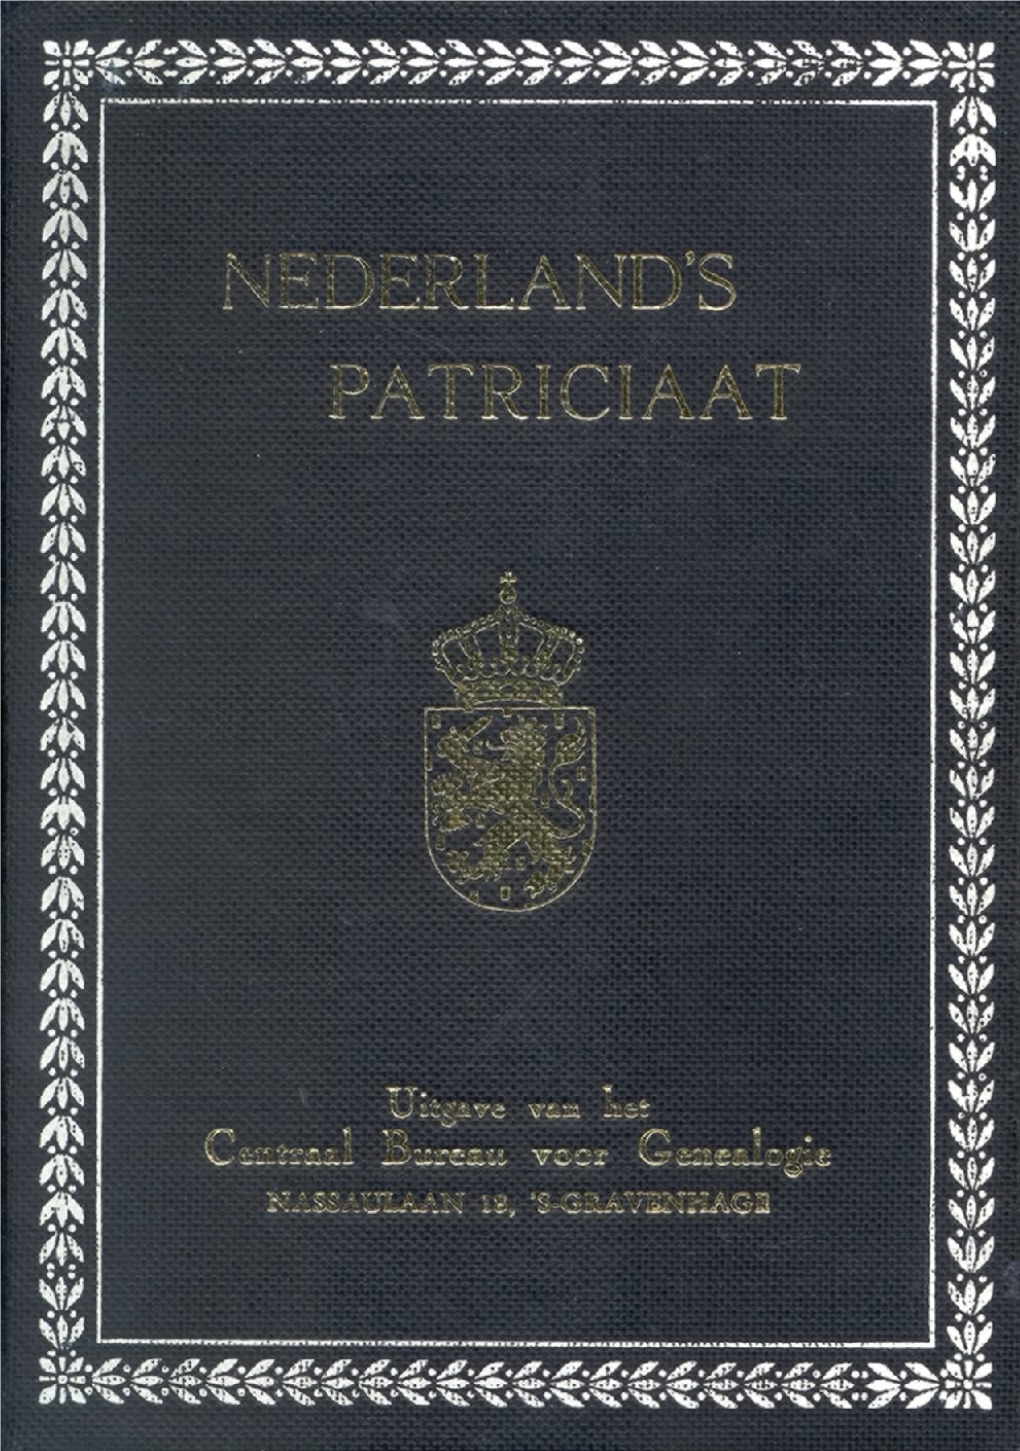 54-1968 Nederland's Patriciaat